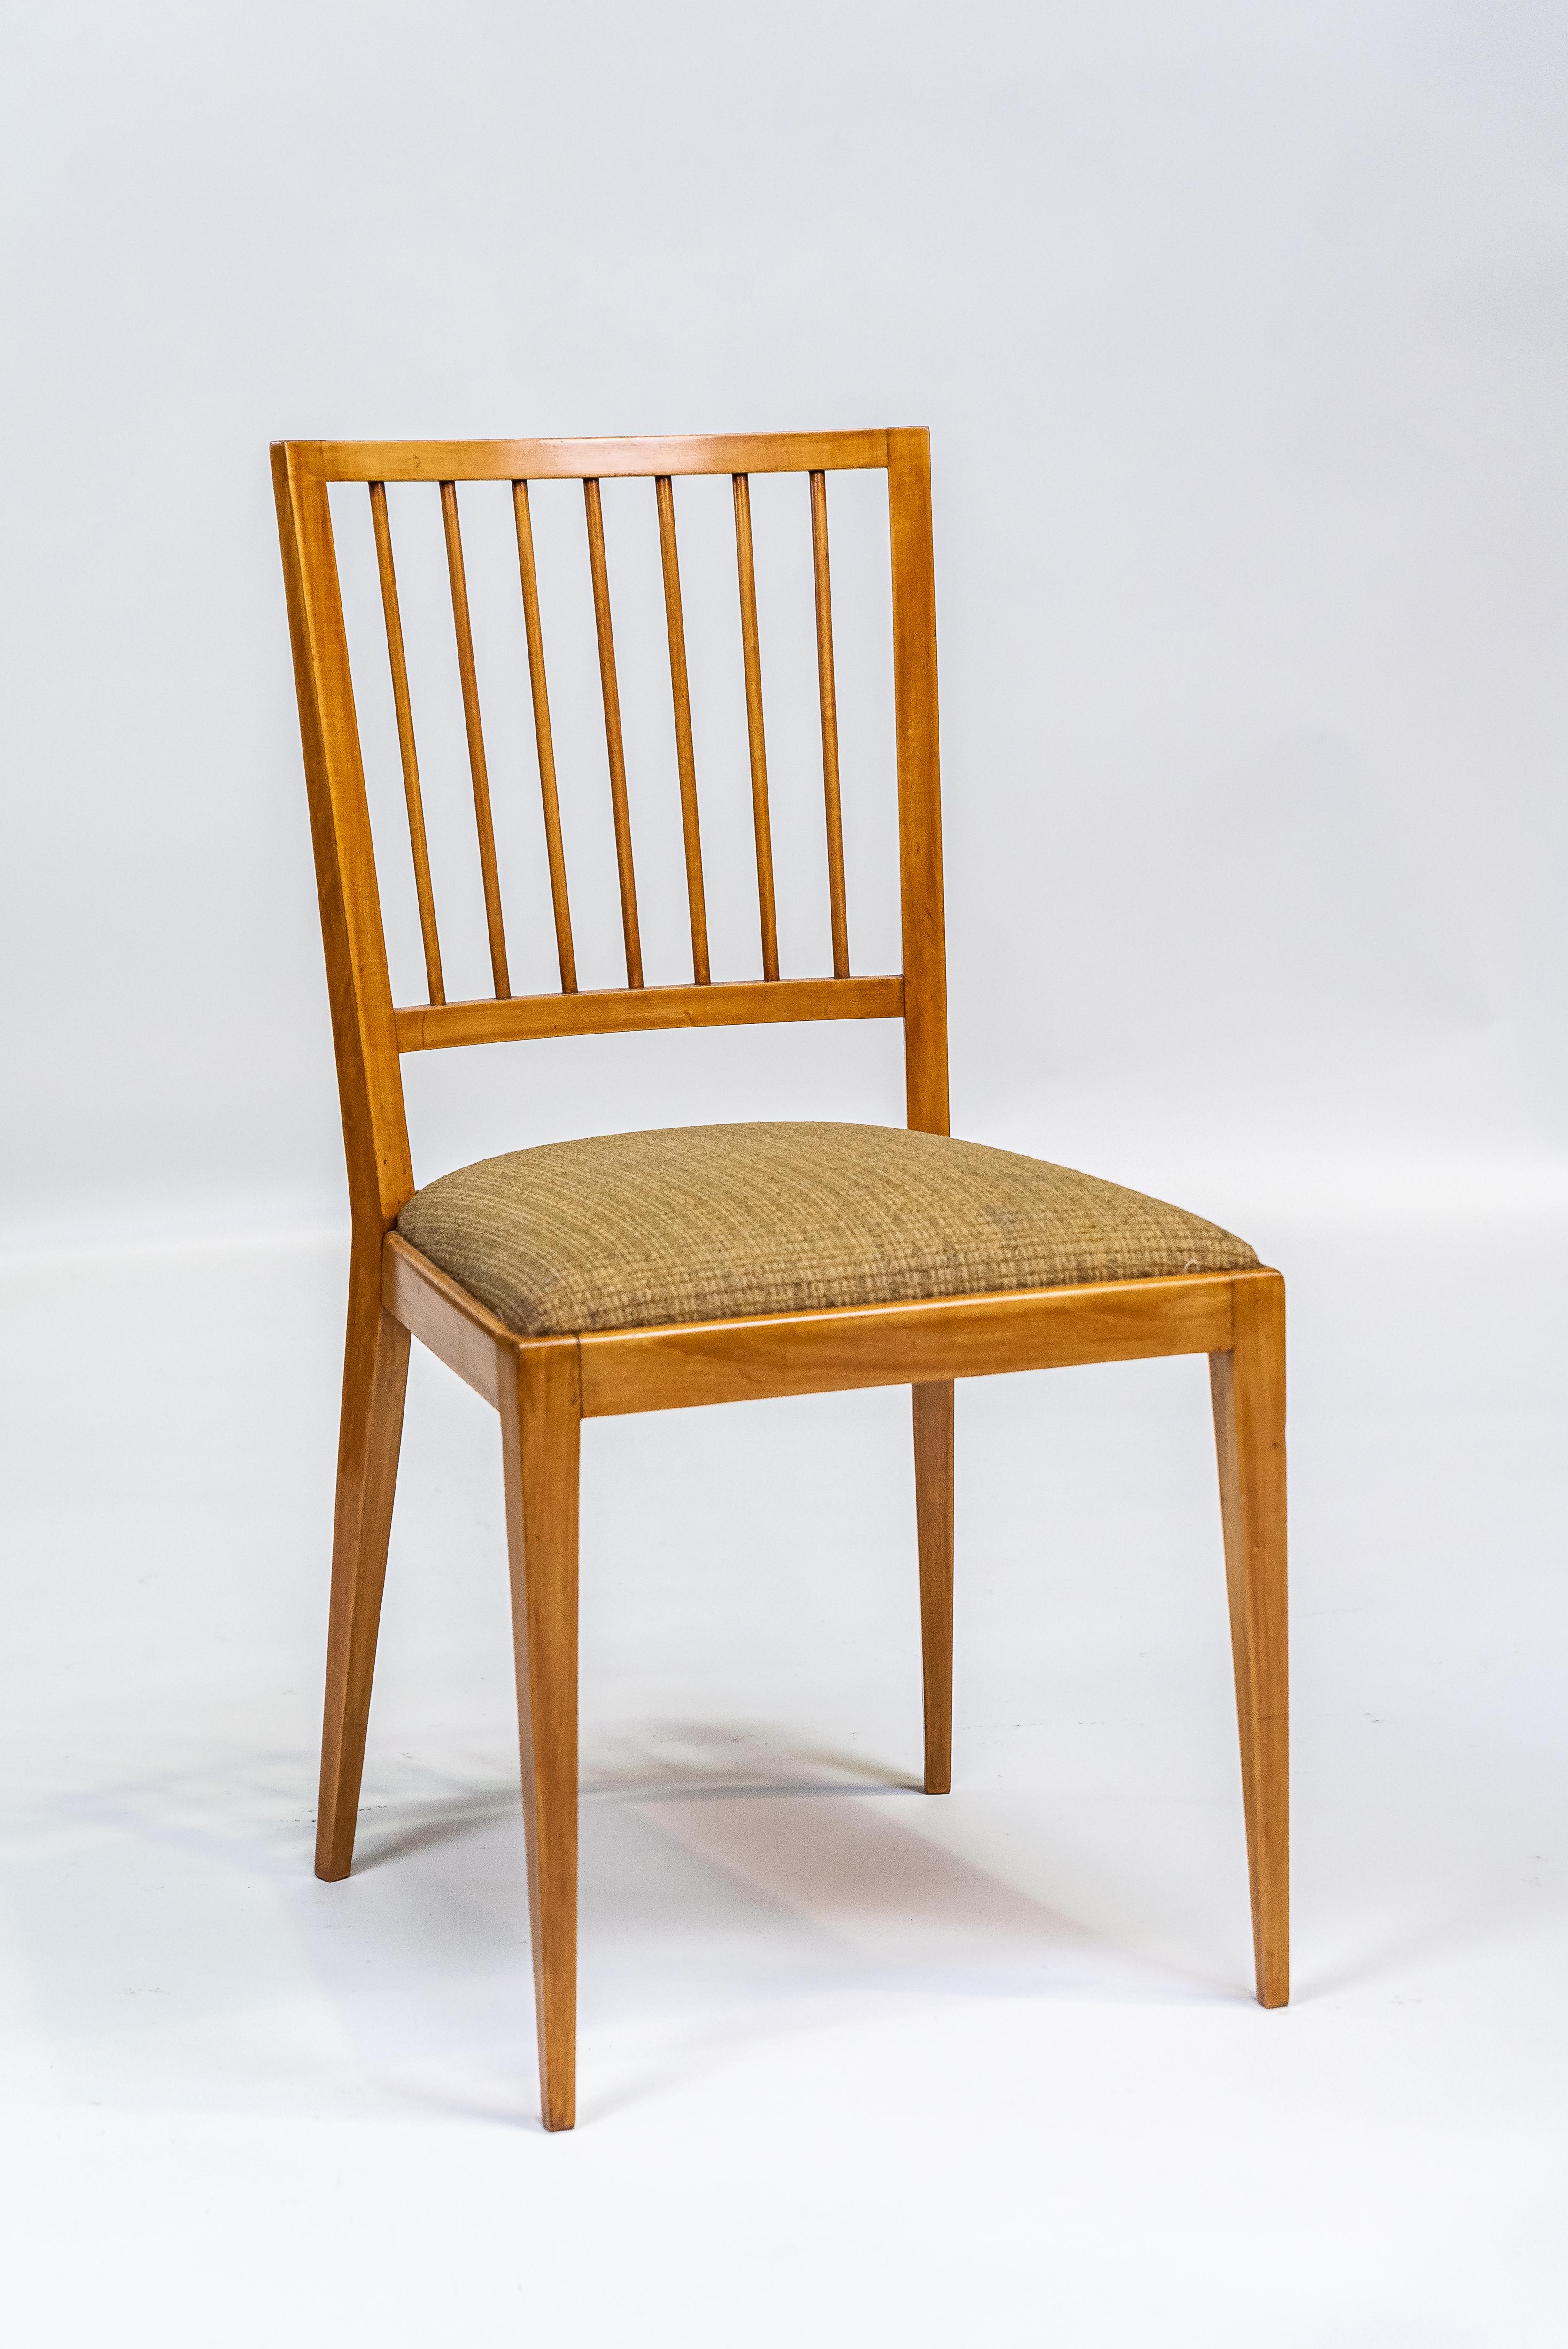 Joaquim Tenreiro, Set 6 Chairs, 1950 5